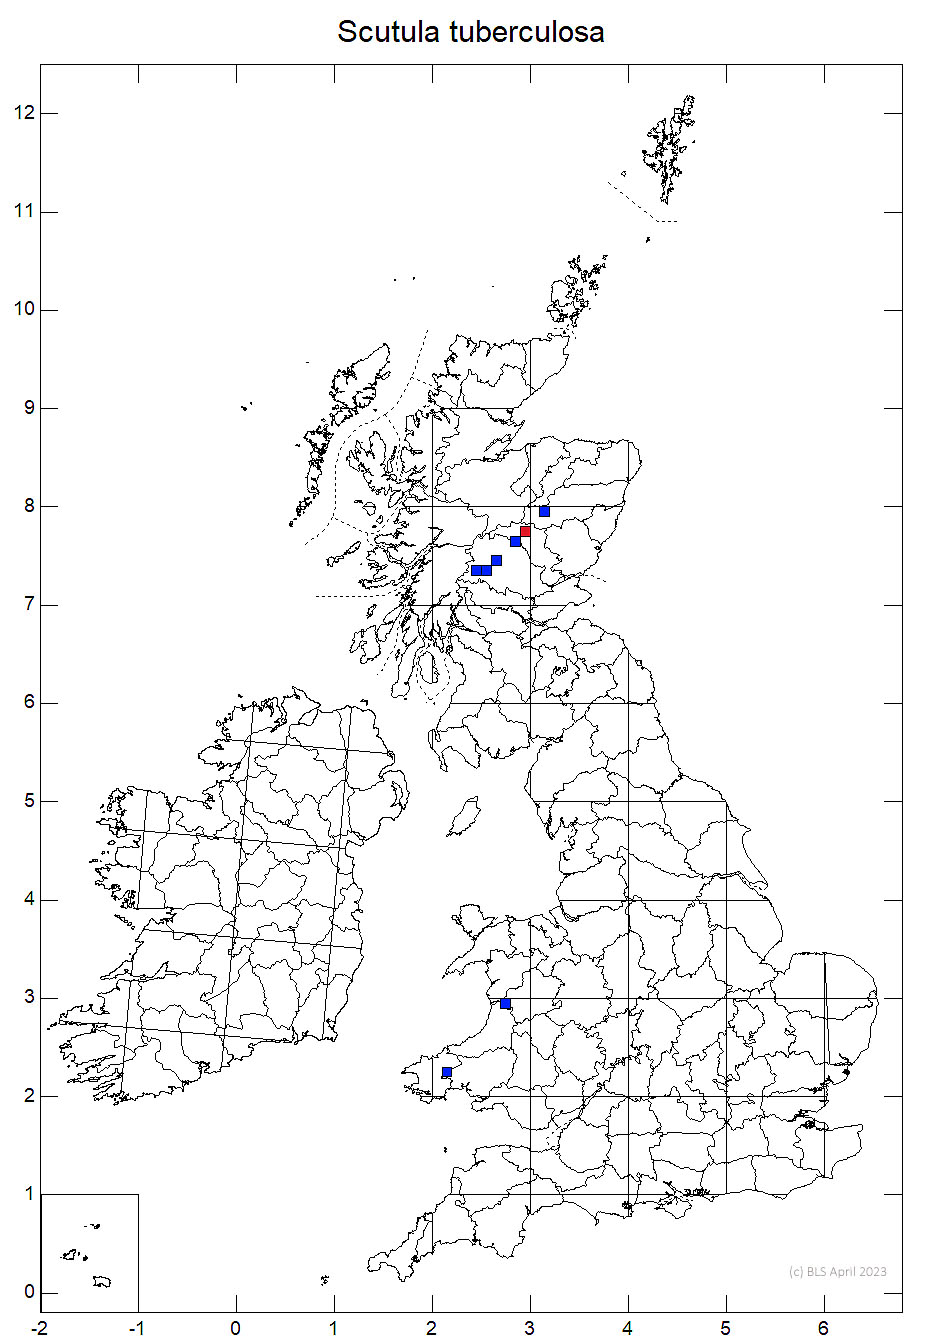 Scutula tuberculosa 10km sq distribution map